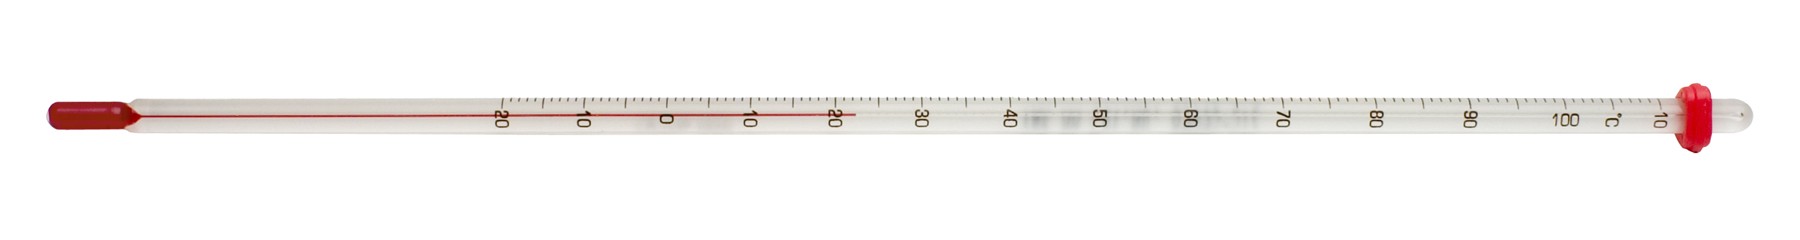 SP Bel-Art, H-B DURAC General Purpose Liquid-In-Glass Laboratory Thermometer; -20 to 110C, 76mm Immersion, Organic Liquid Fill